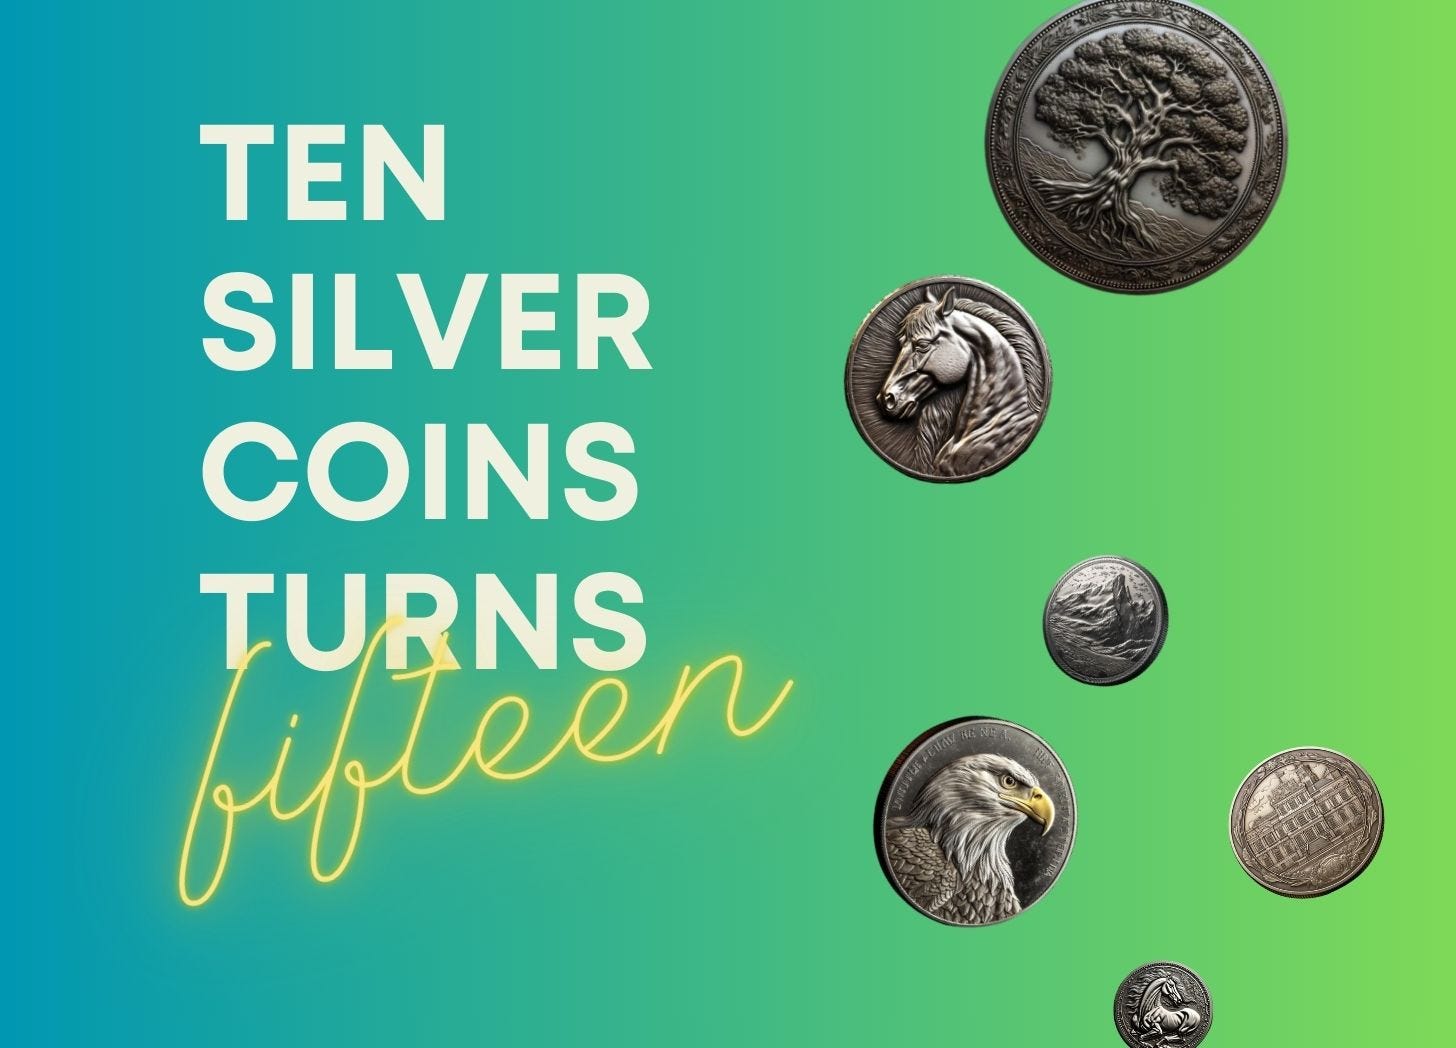 Andrew Kooman's Ten Silver Coins series turns 15 years old